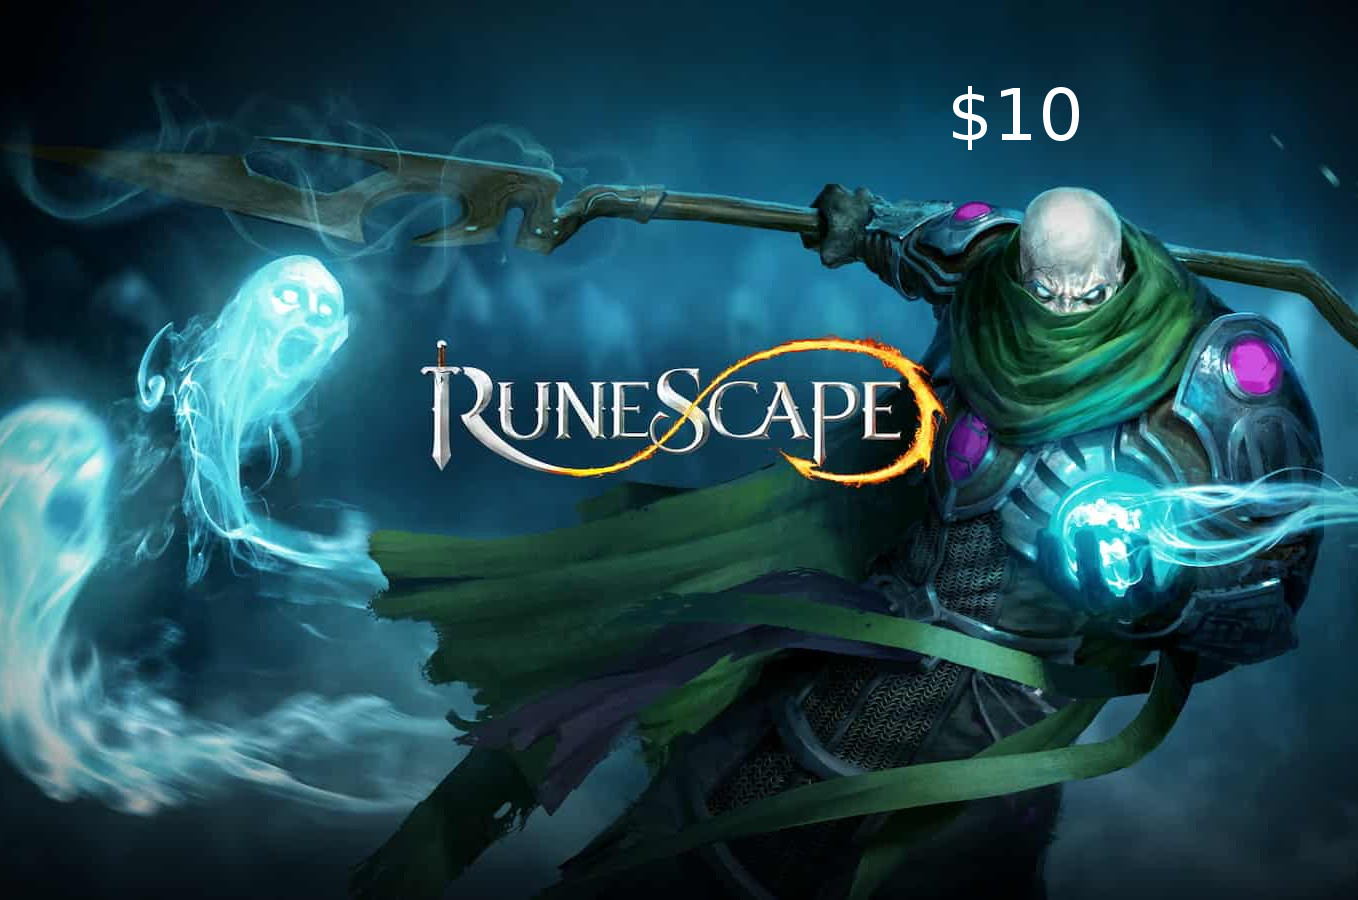 Runescape $10 Prepaid Game Card